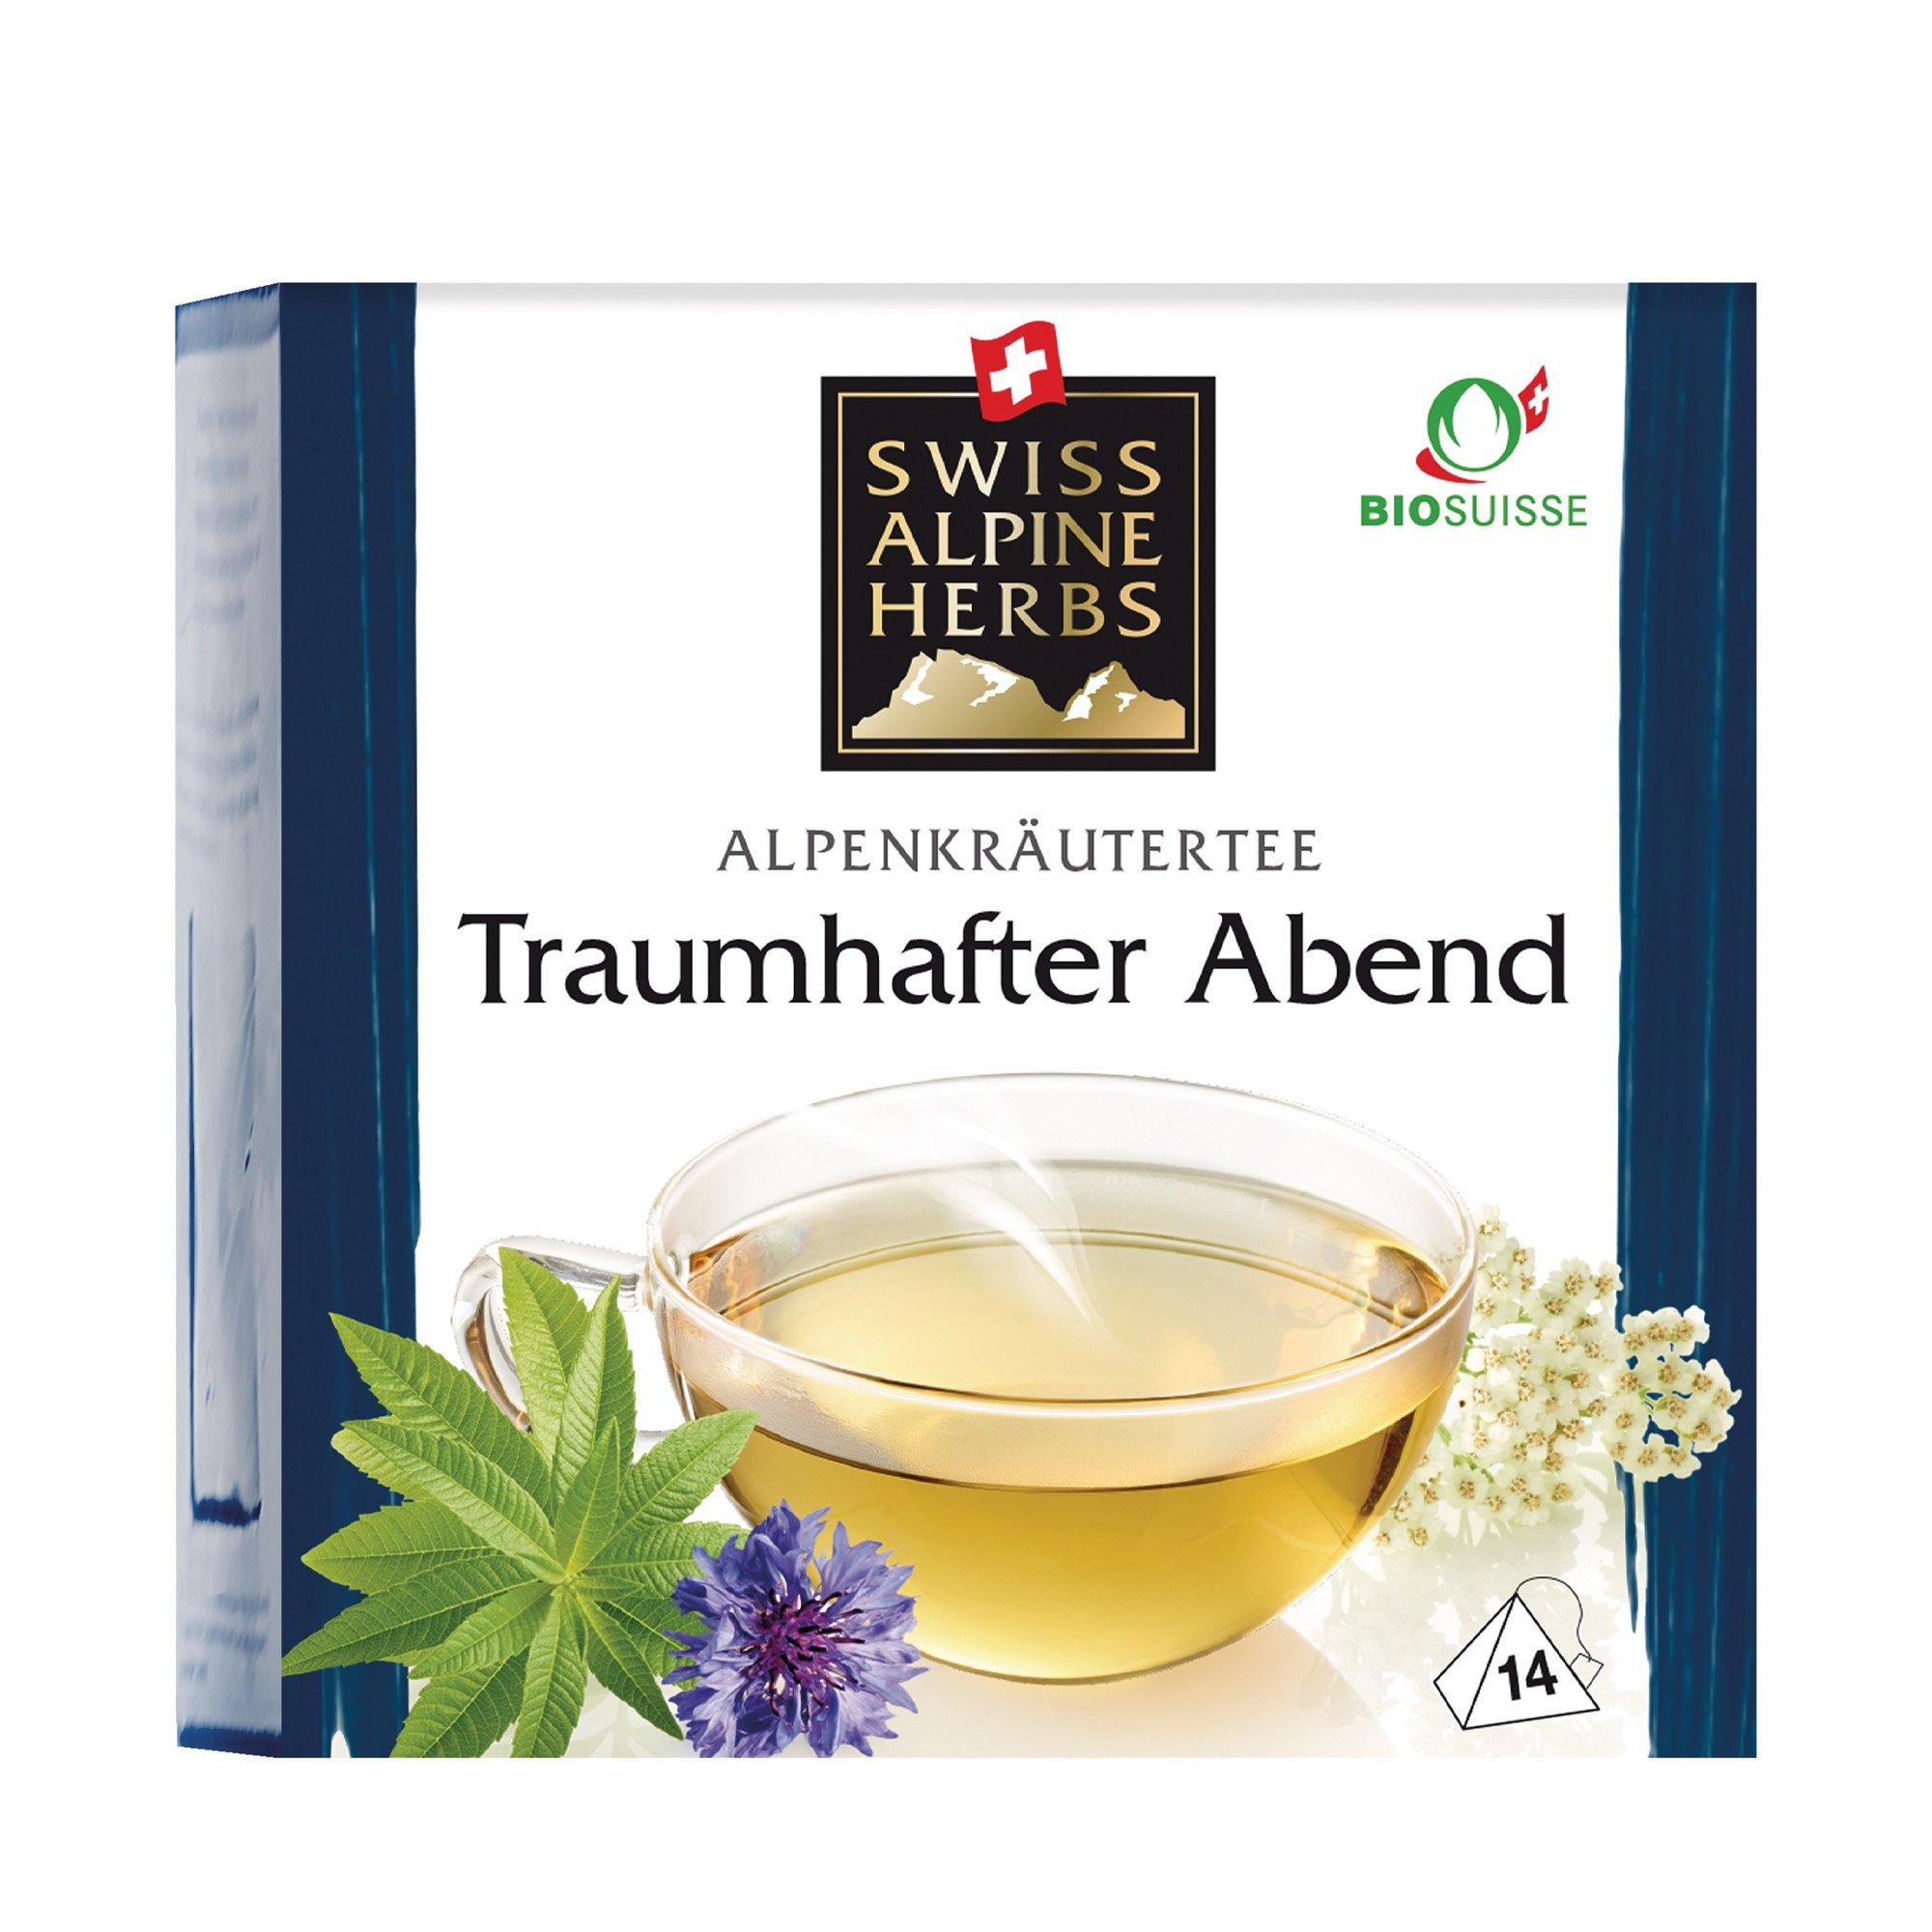 Image of Swiss Alpine Herbs Traumhafter Abend - 14X1G